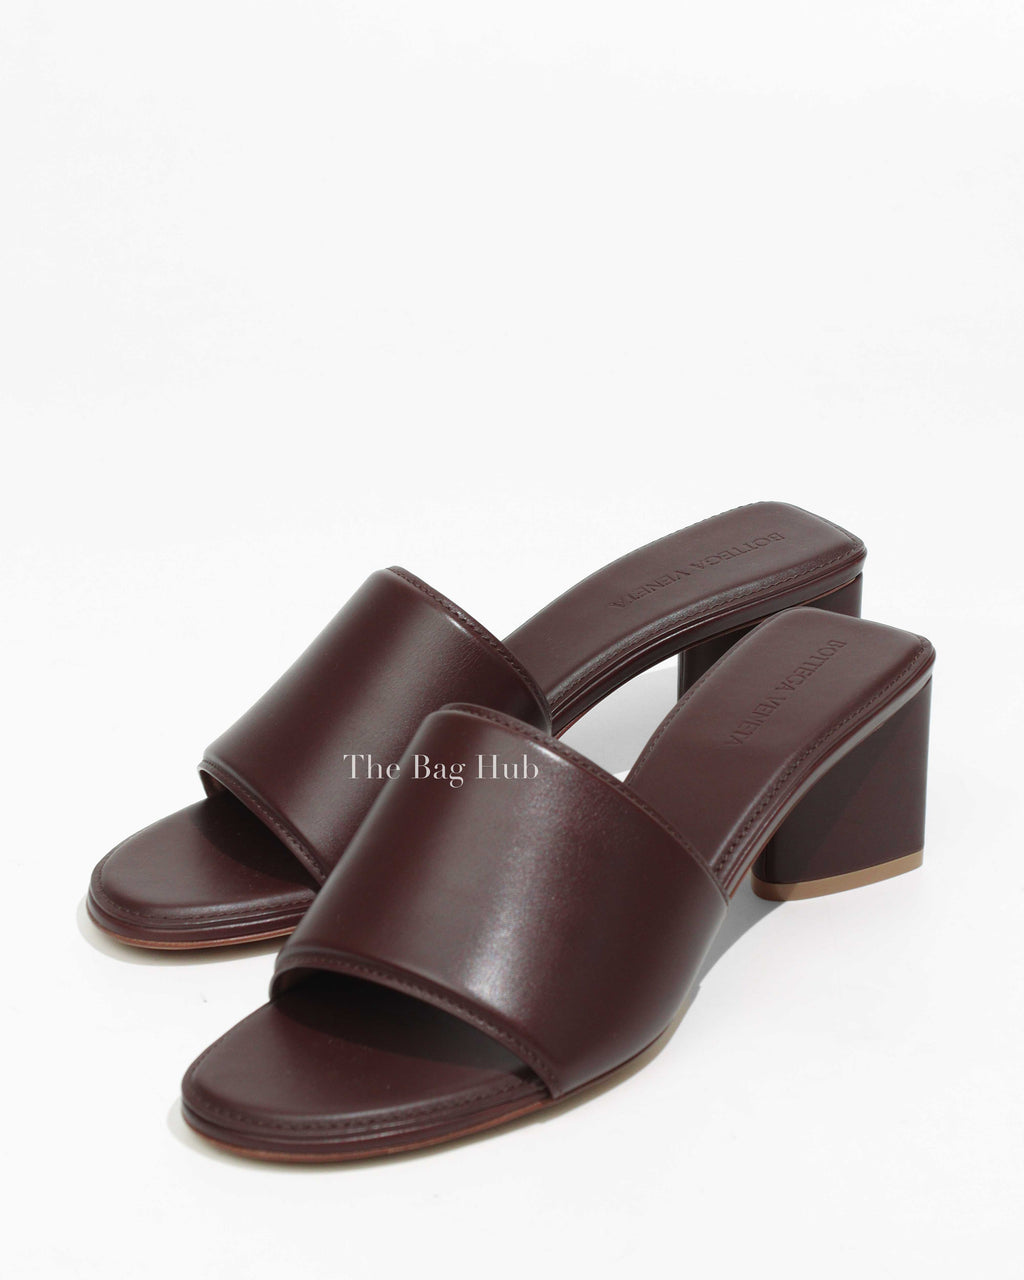 Bottega Veneta Brown Lambskin Leather The Band Mule Heels Size 38.5-1